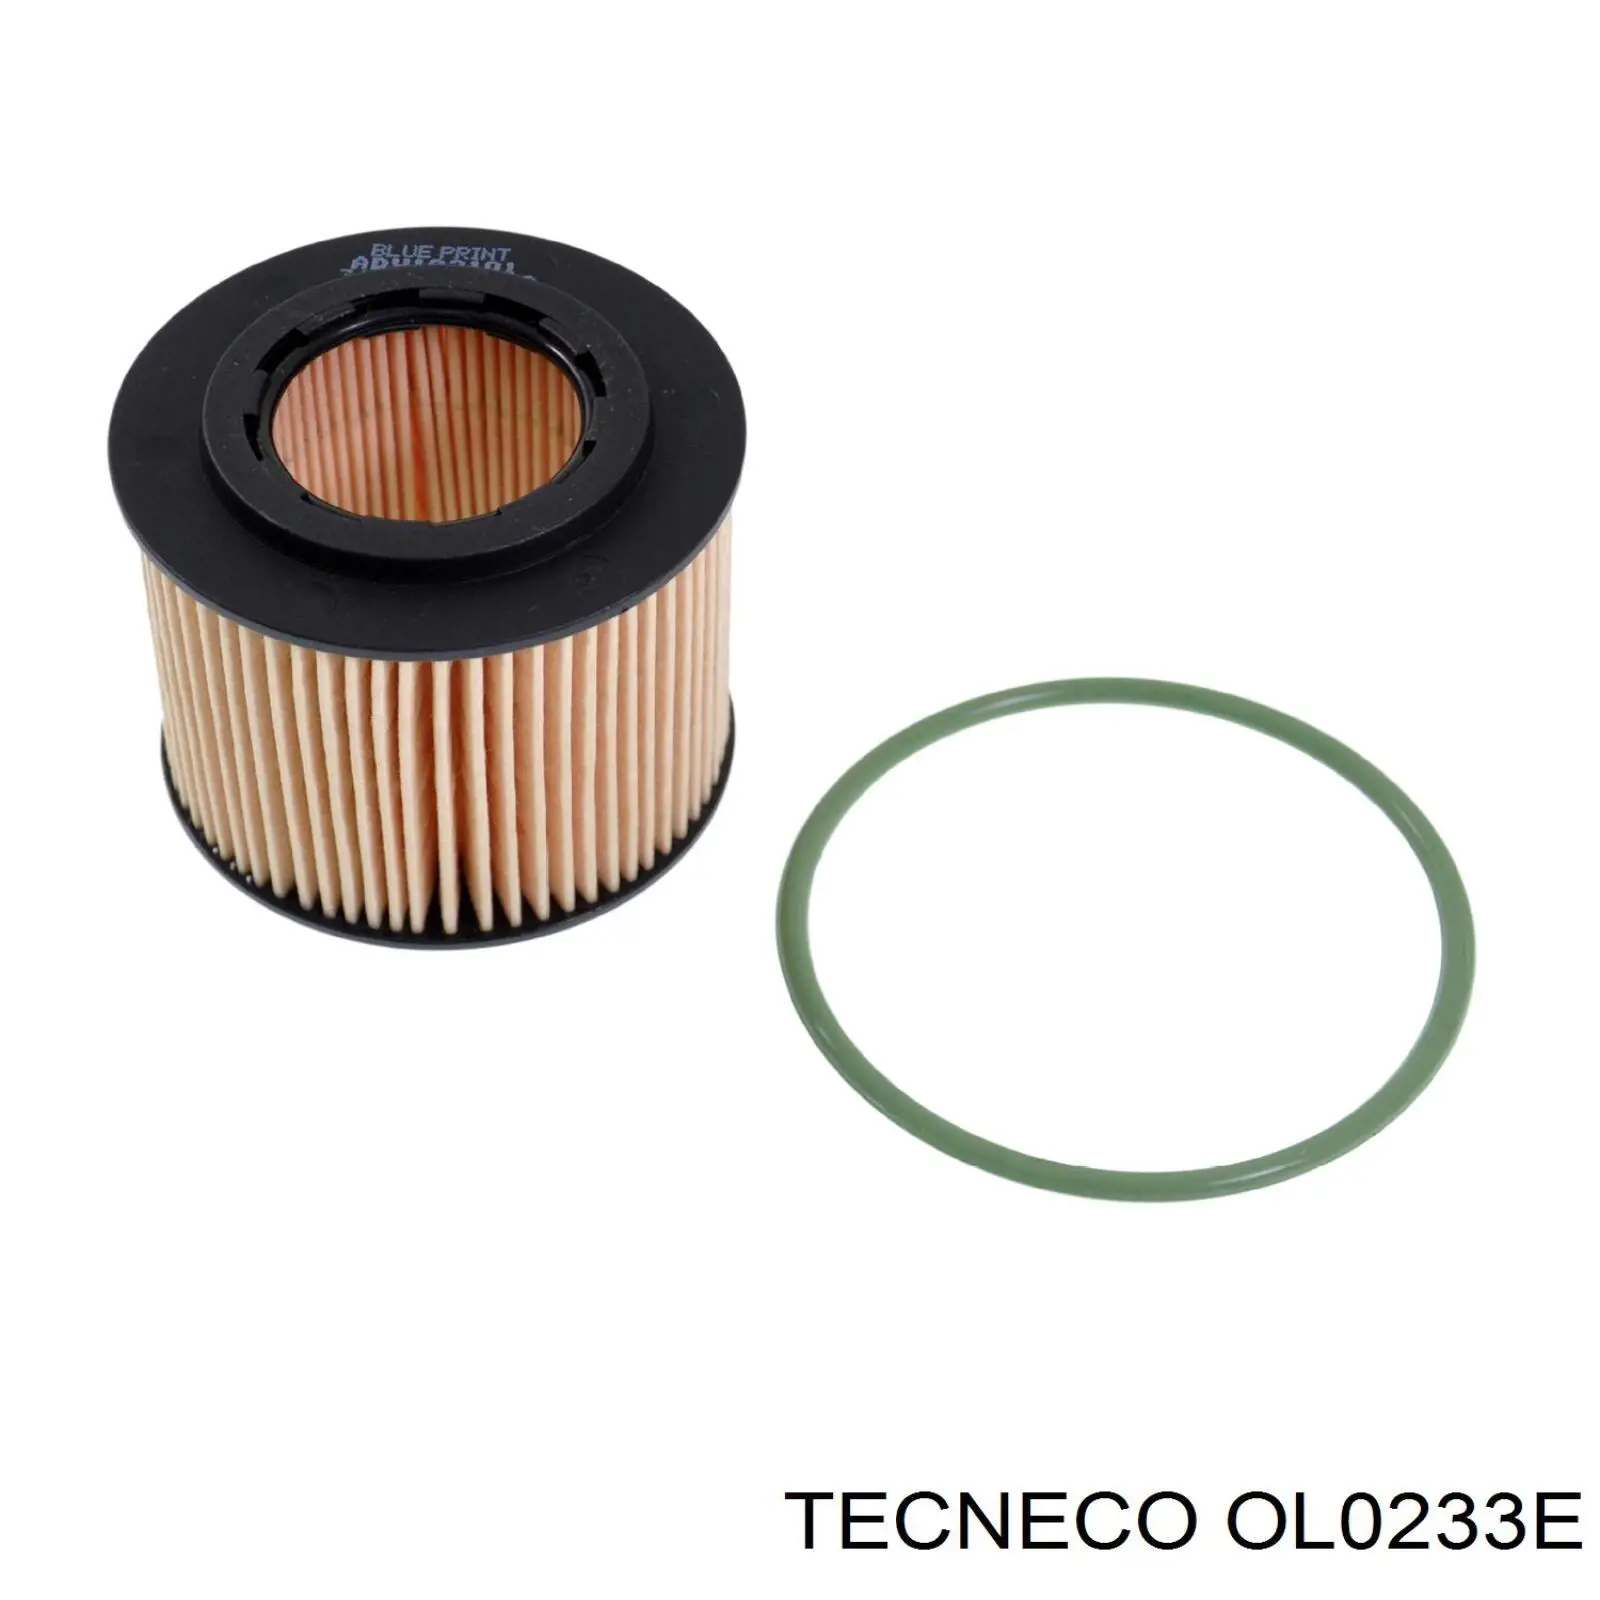 OL0233E Tecneco filtro de aceite